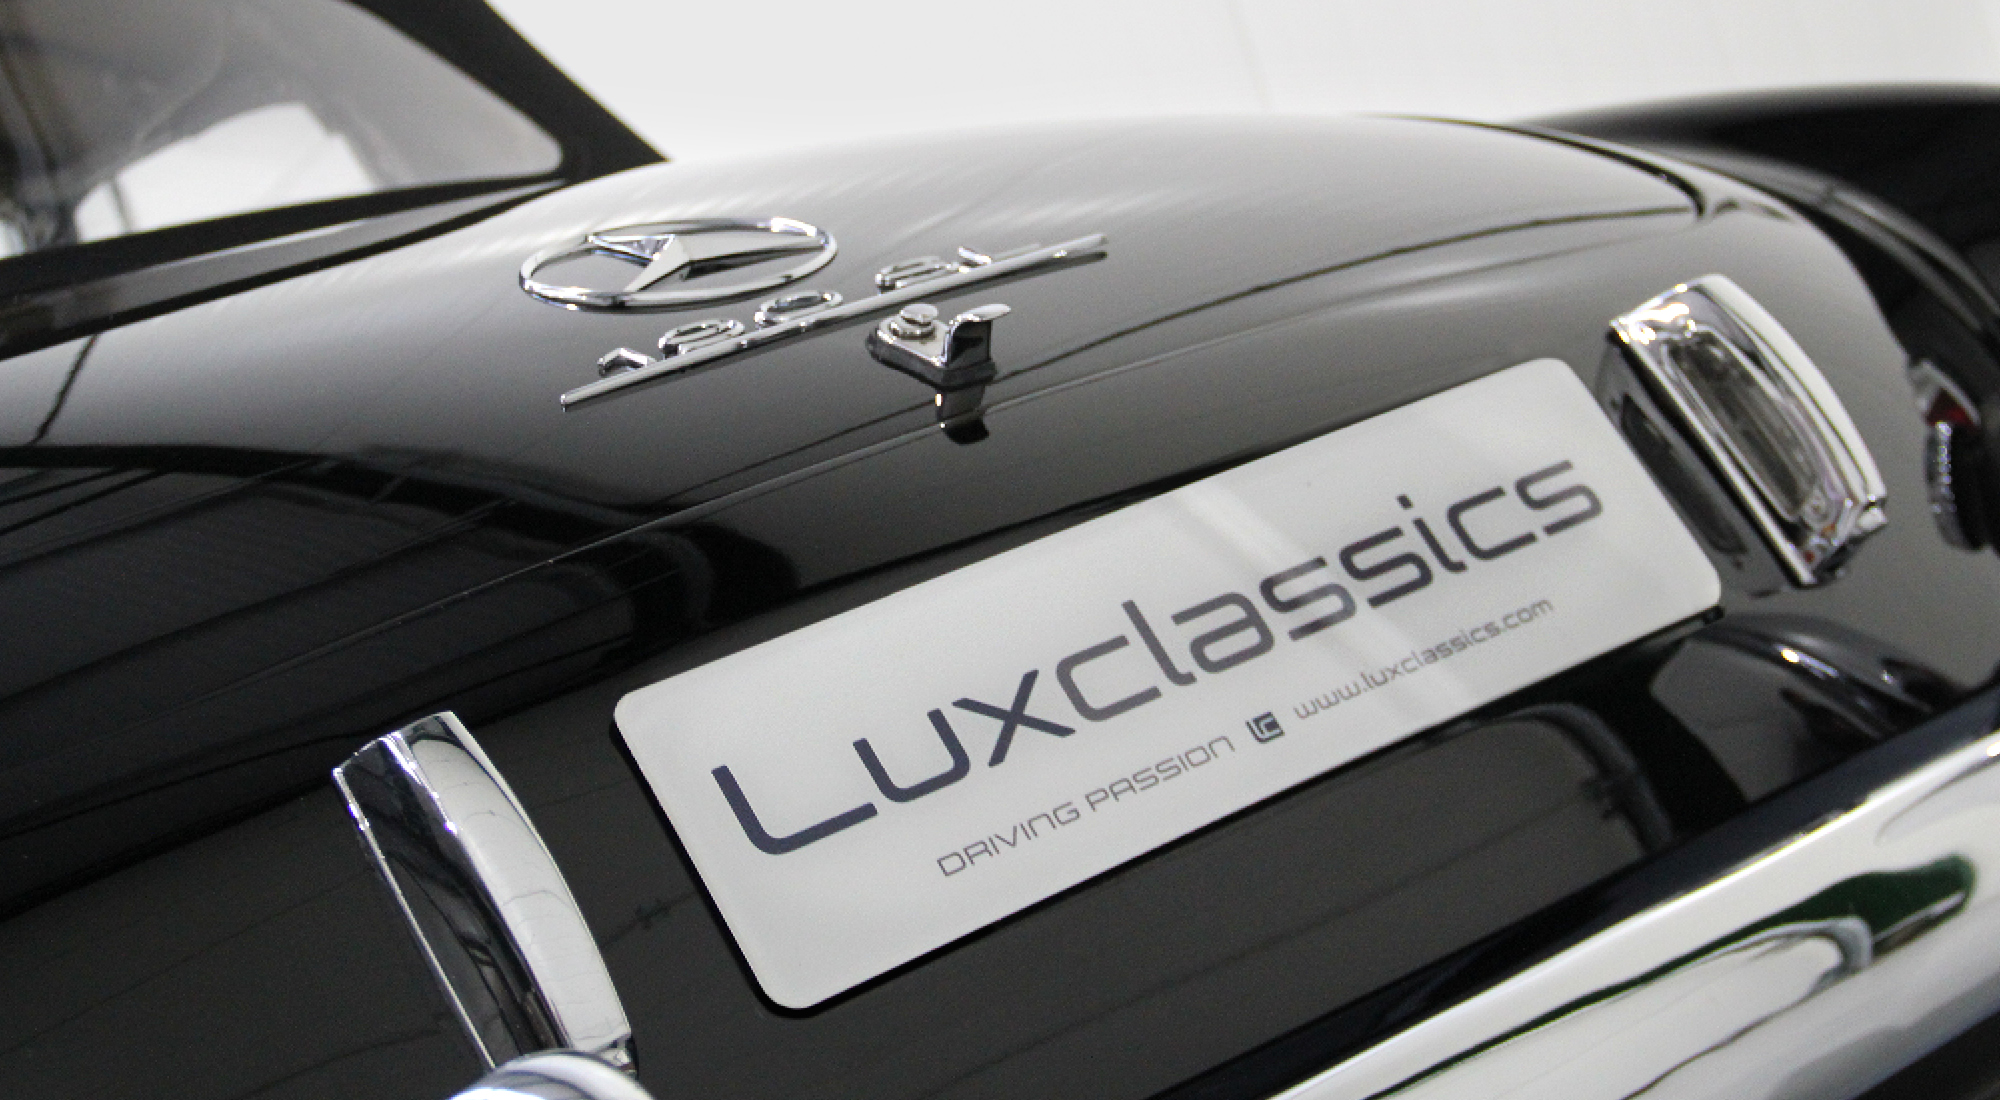 Lux classics and sports car sales and restoration Chelmsford Essex Mercedes Benz 190Sl Jaguar E-Type Porsche 356